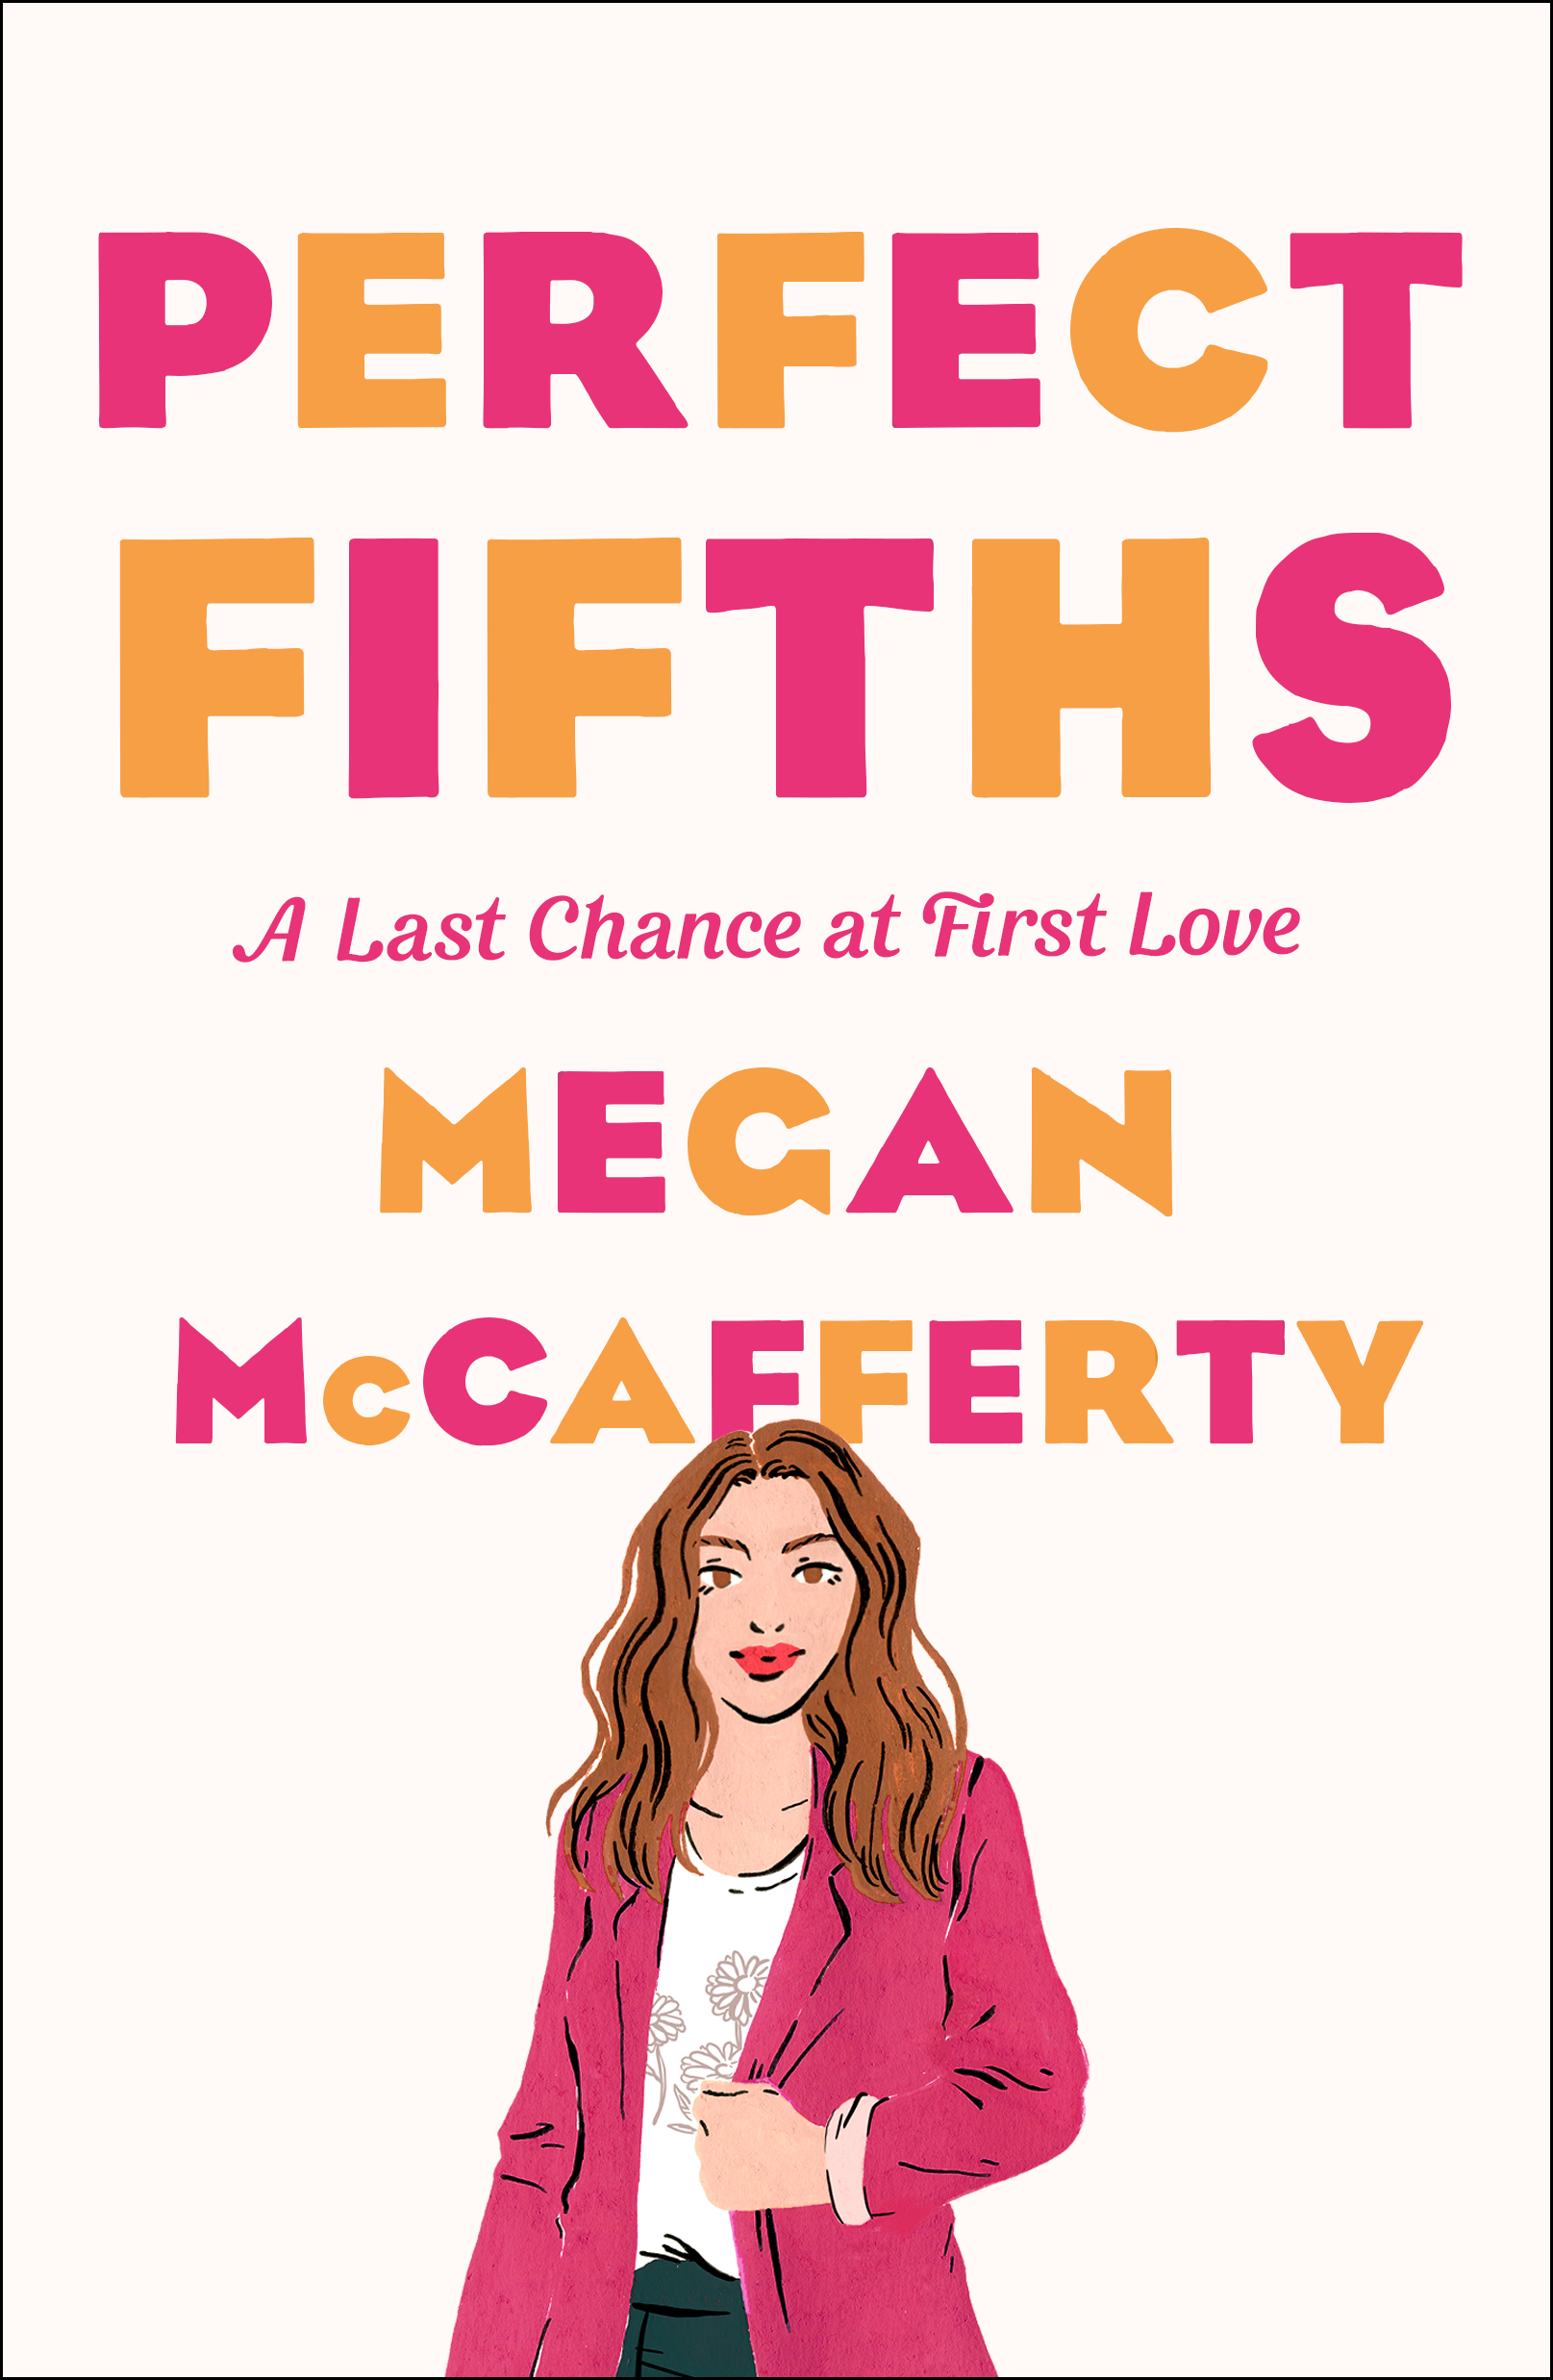 Perfect Fifths Megan Mccafferty